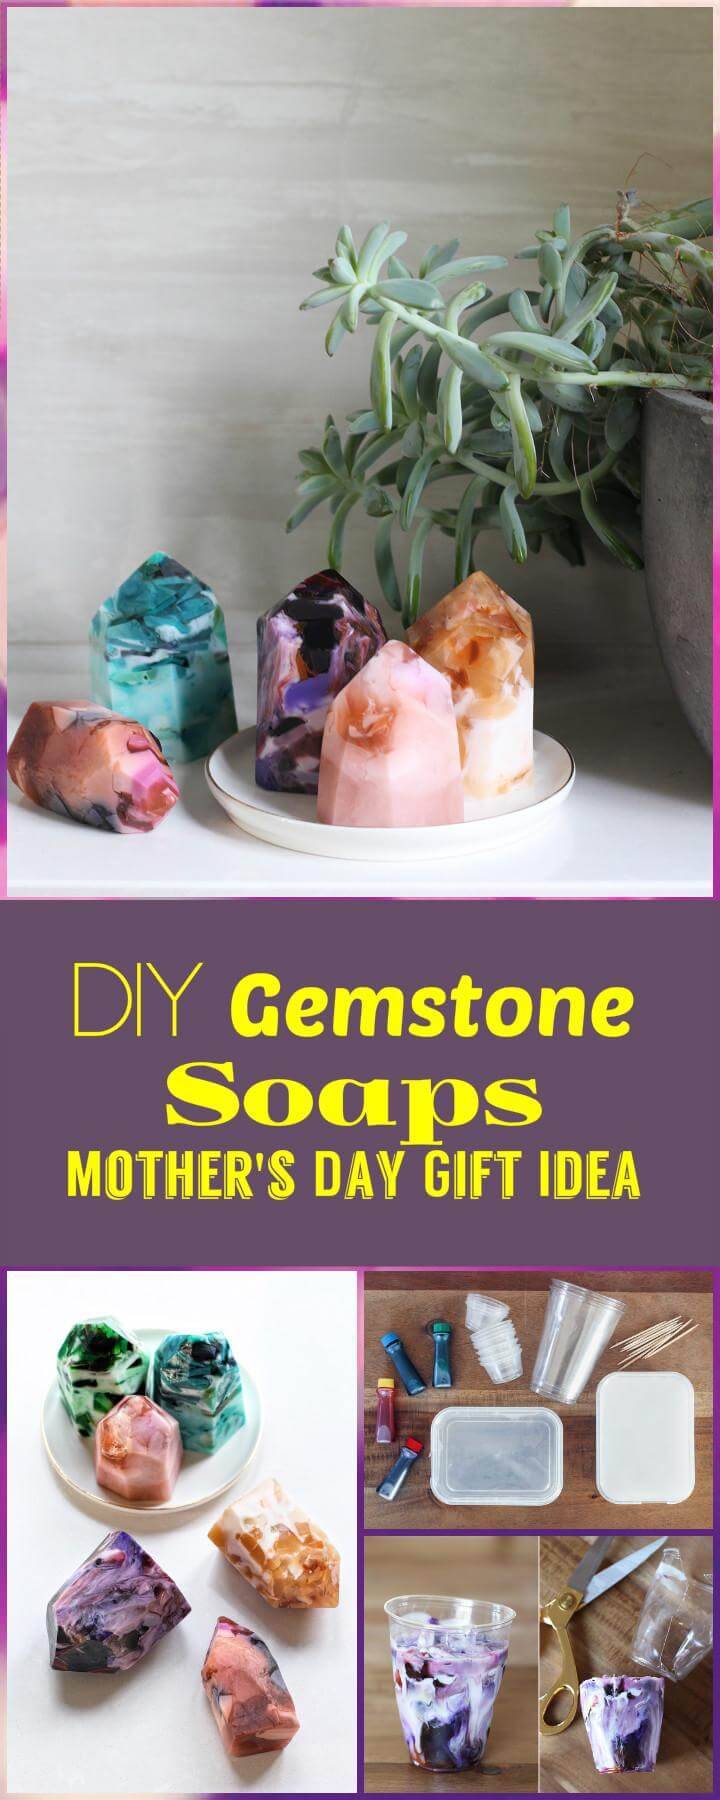 DIY gemstone soaps